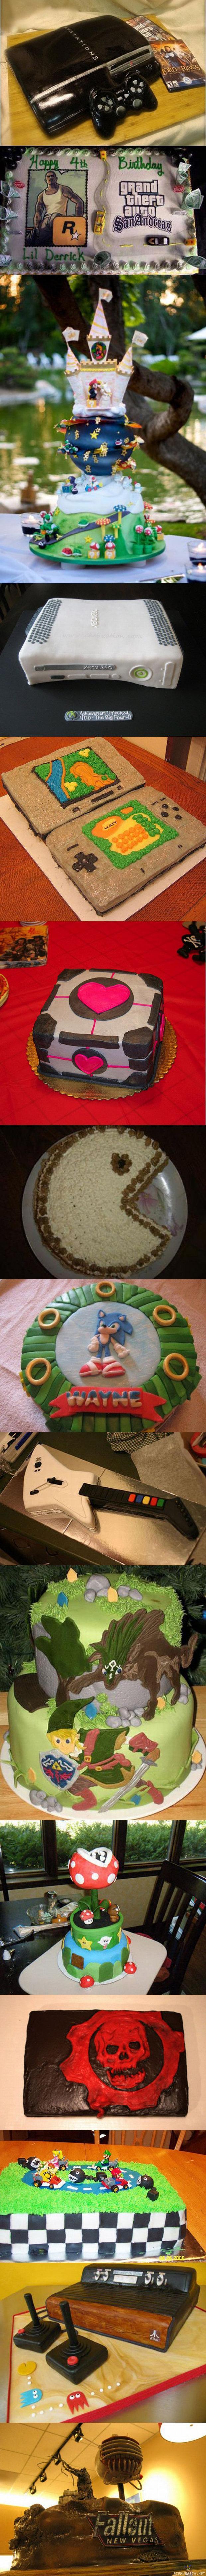 Gaming cakes